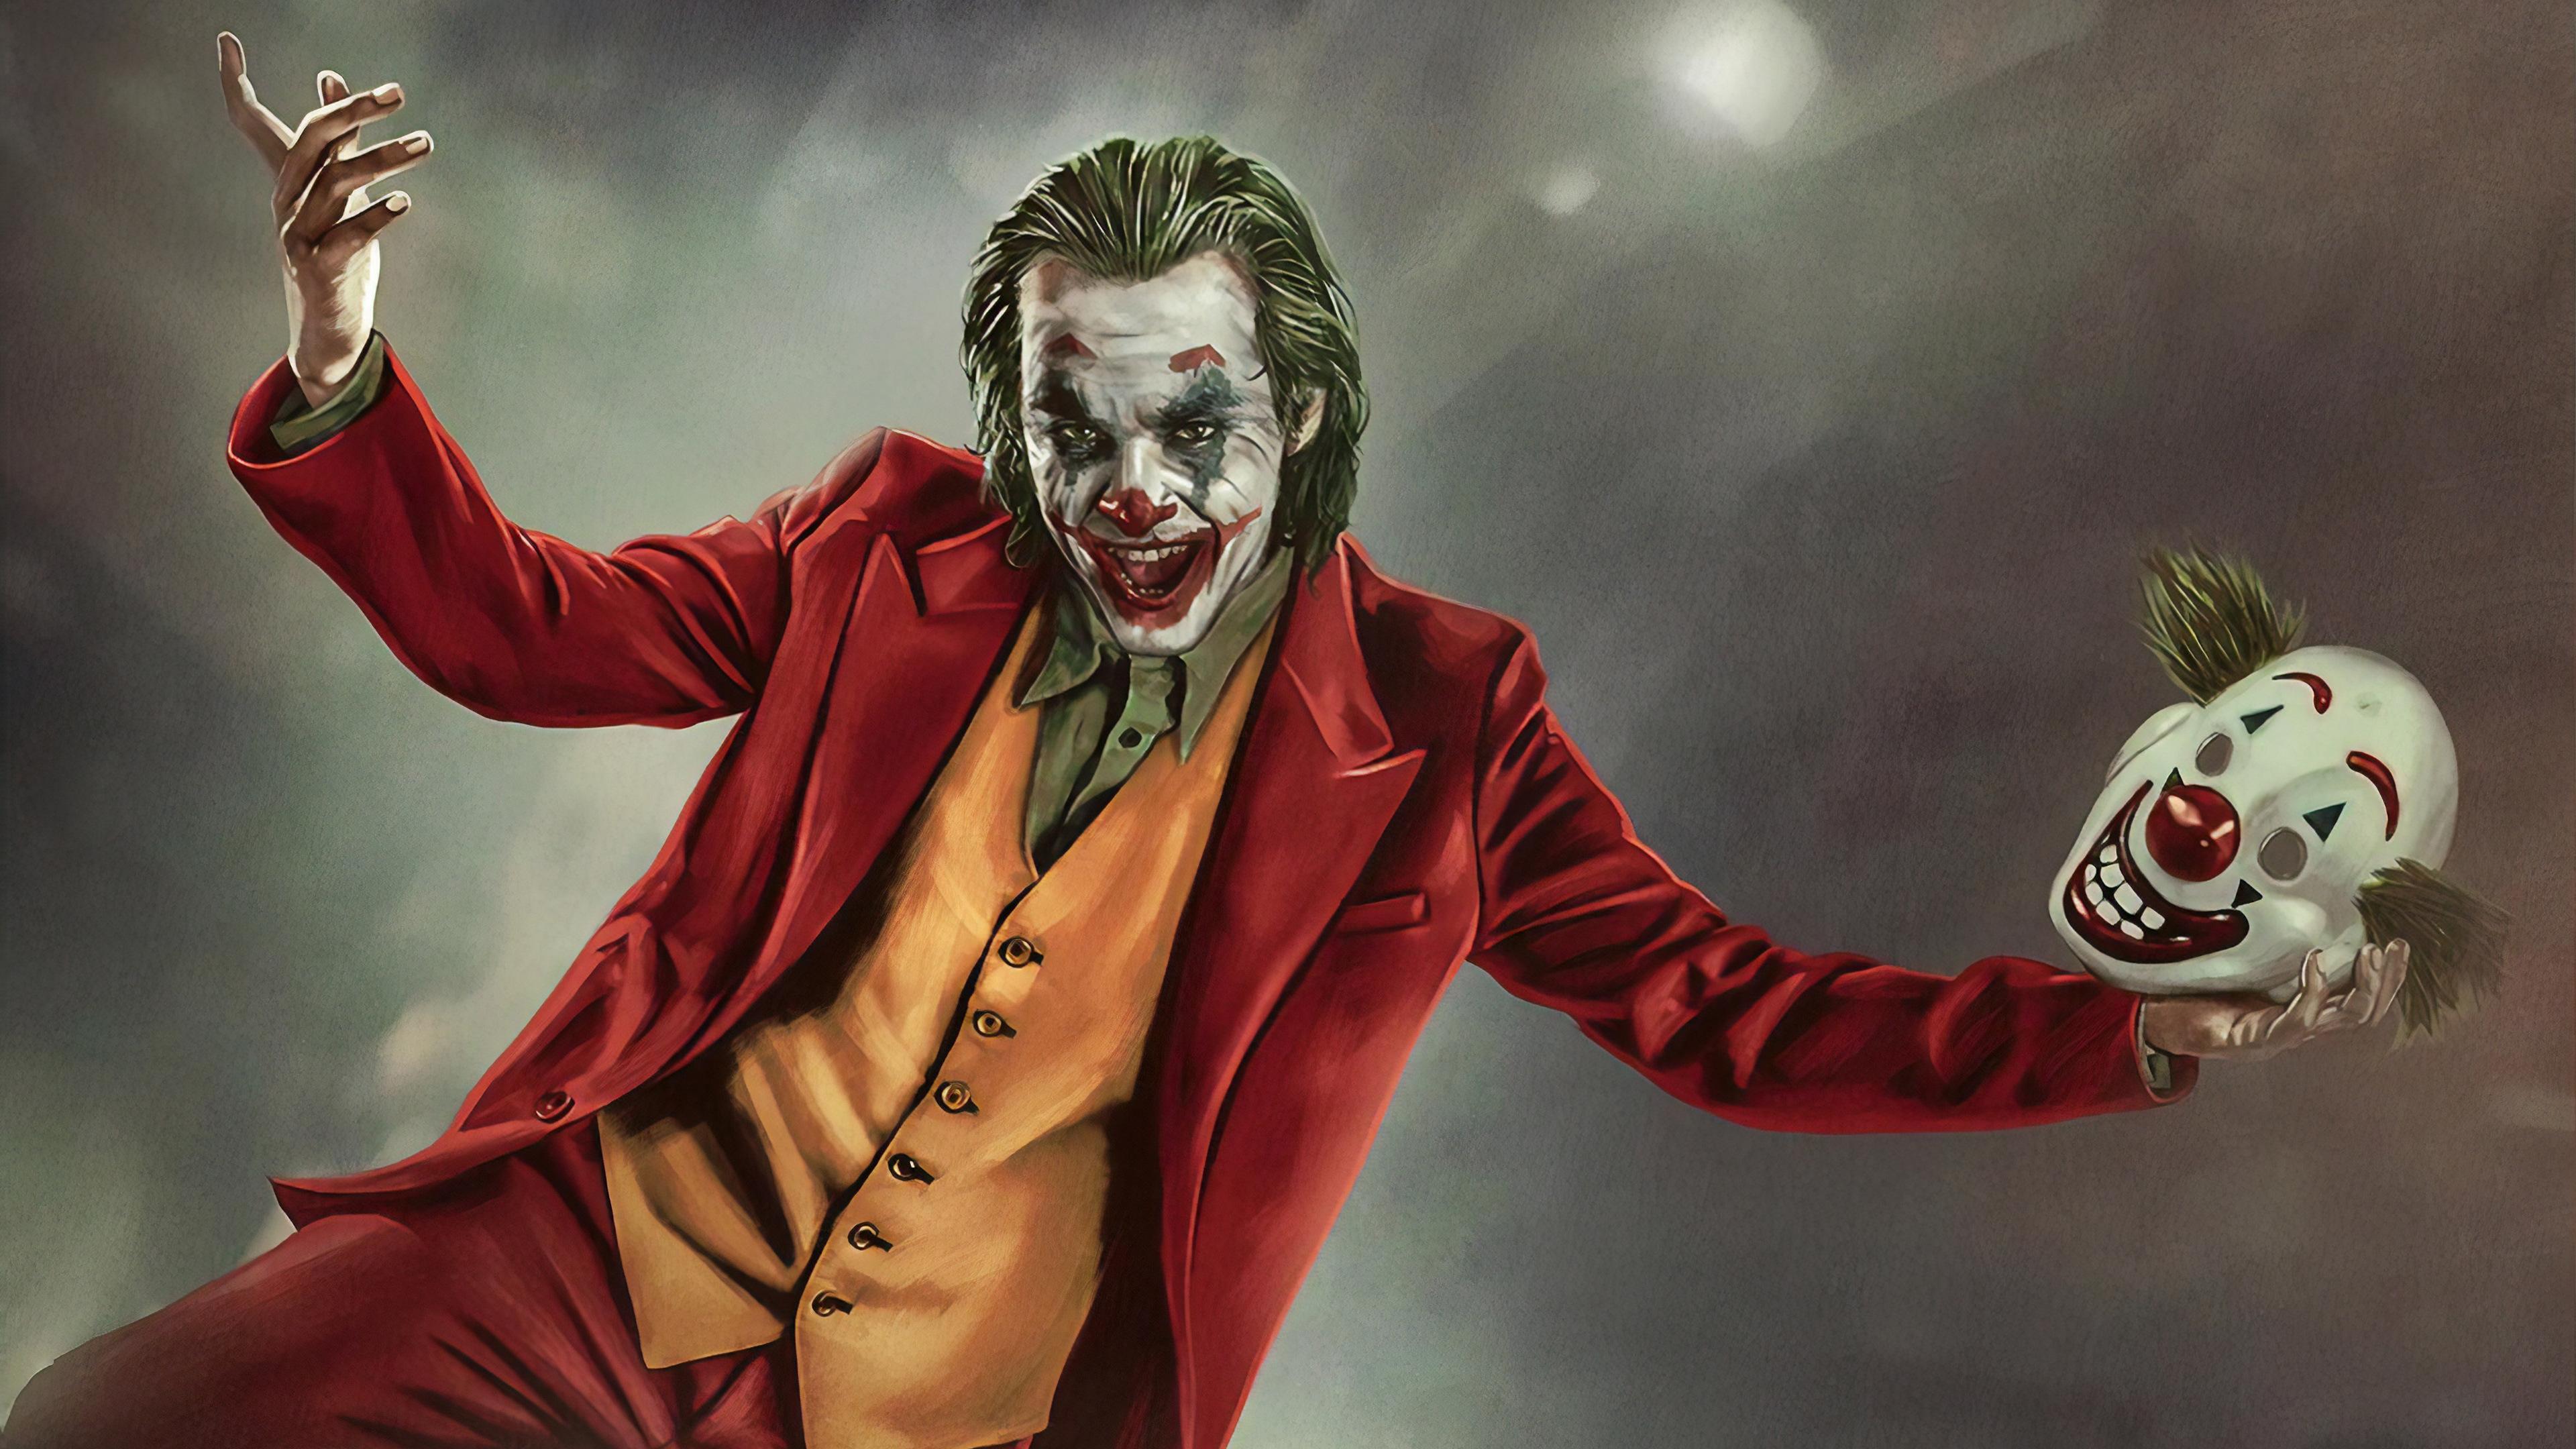 HD wallpaper, Mask, Joaquin Phoenix, Smile, Movie, 4K, 2019, Joker